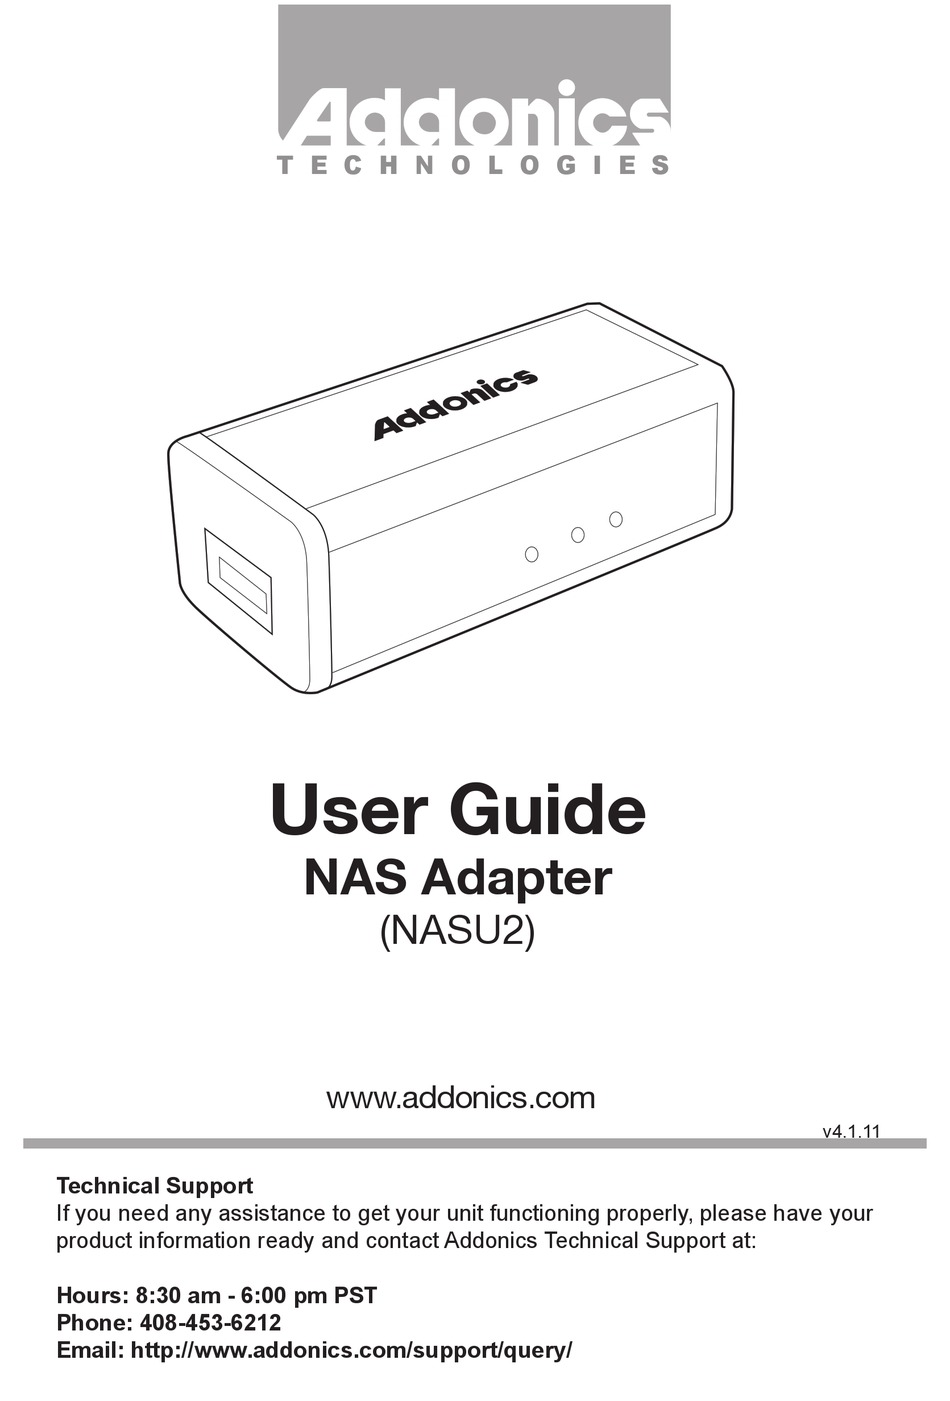 ADDONICS TECHNOLOGIES NASU2 USER MANUAL Pdf Download | ManualsLib